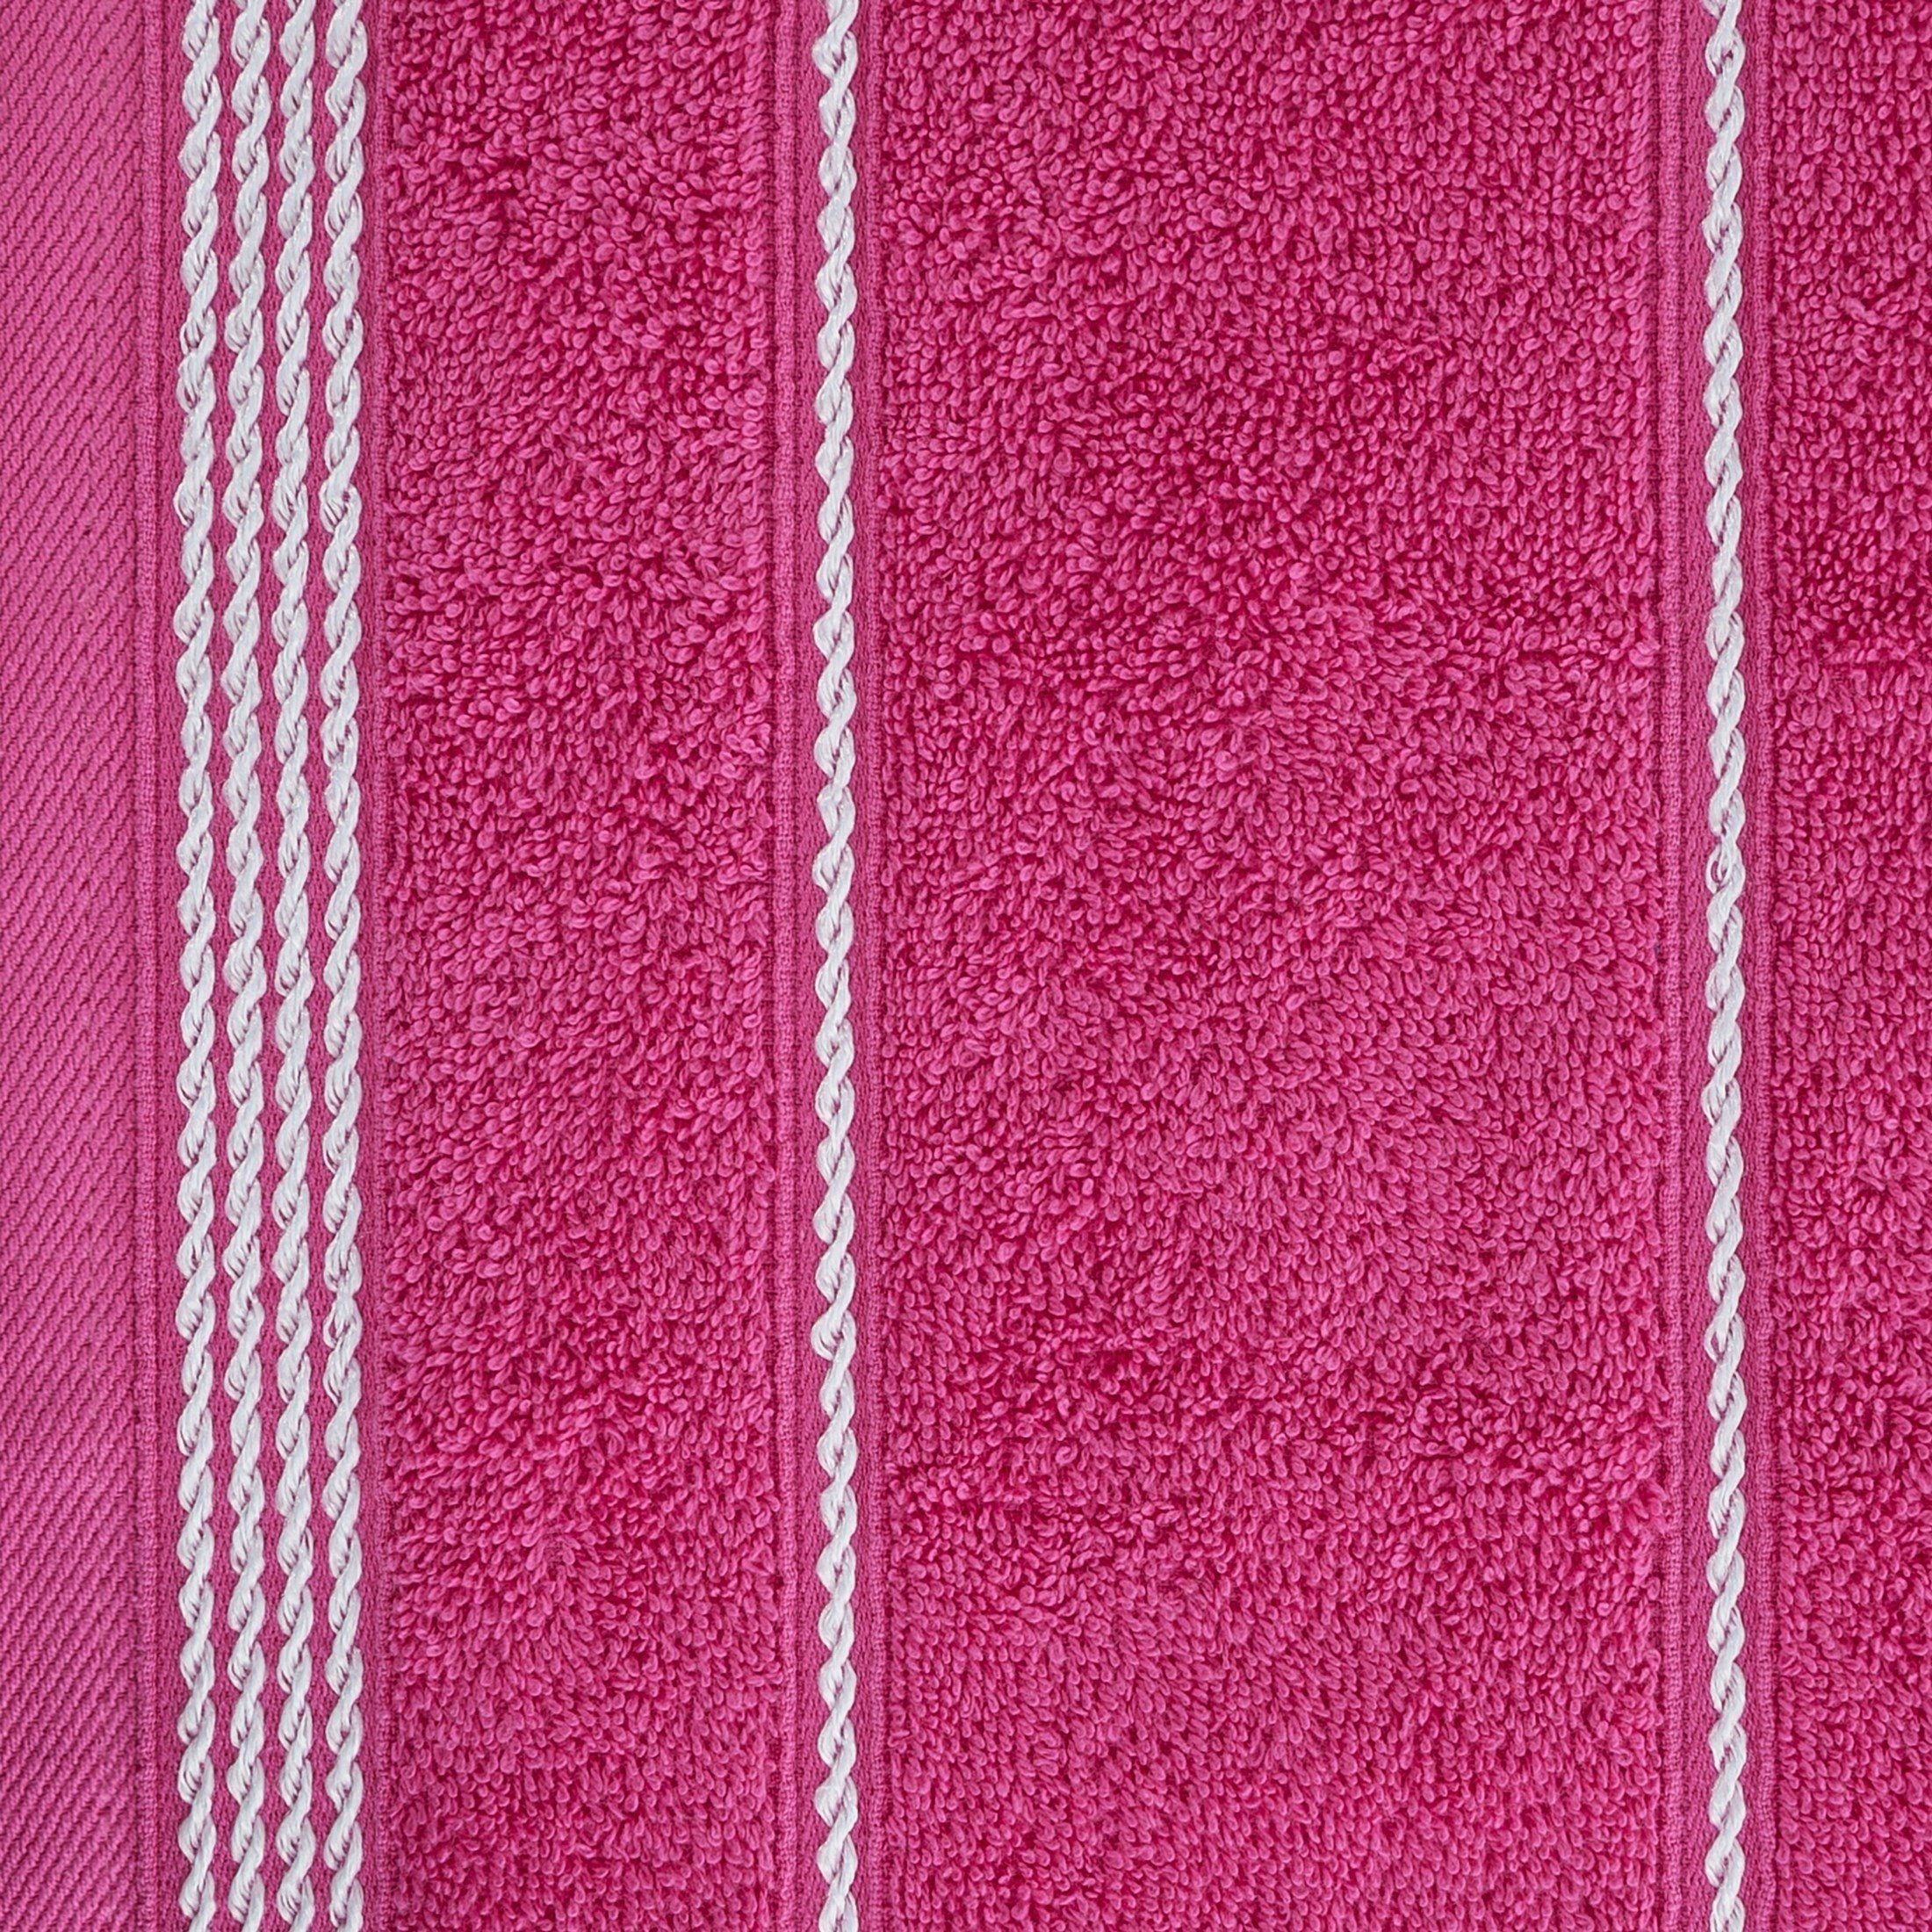 Ręcznik Mira 30x50 różowy 14 frotte 500 g/m2